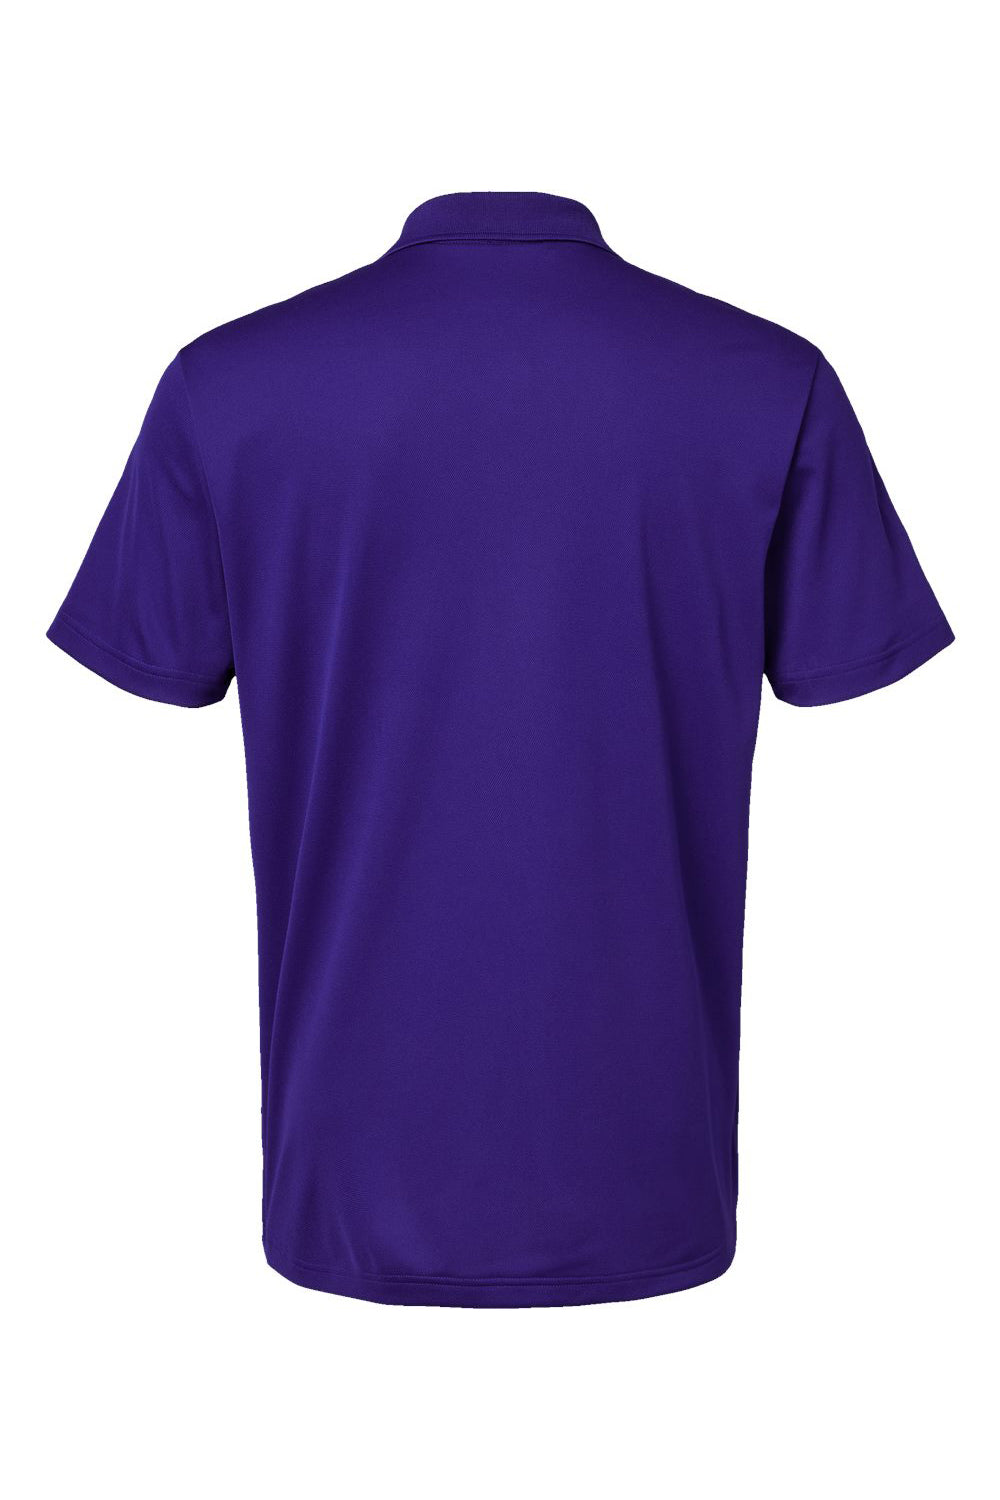 Adidas A430 Mens UV Protection Short Sleeve Polo Shirt Collegiate Purple Flat Back